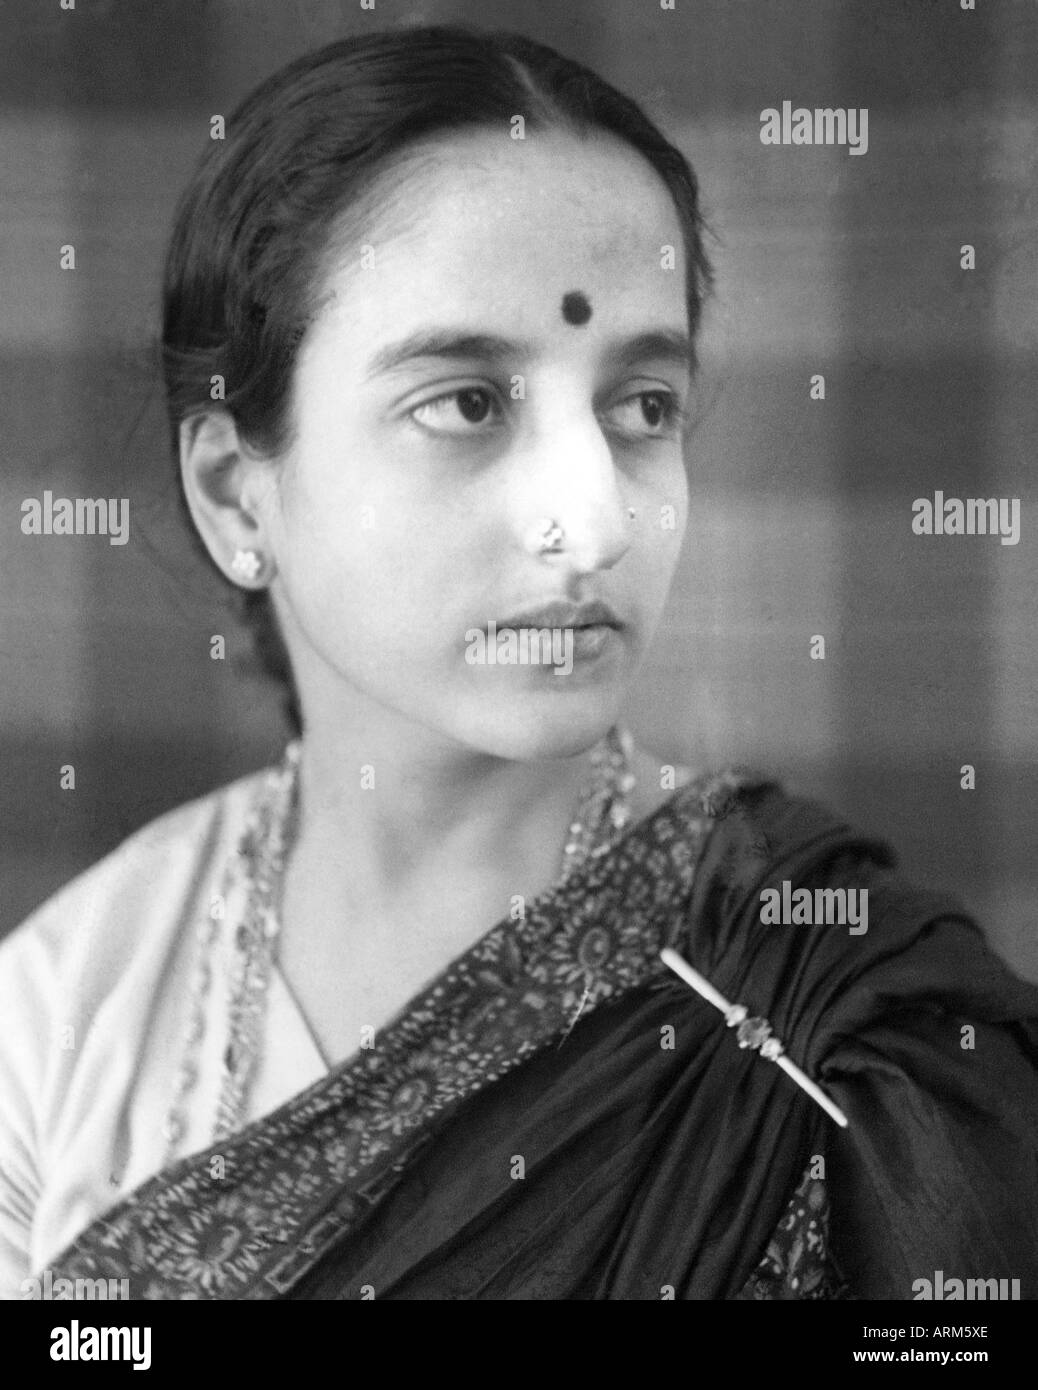 VRB101253 Indian woman in saree bindi on forehead portrait in studio Madras India 1940 s Stock Photo